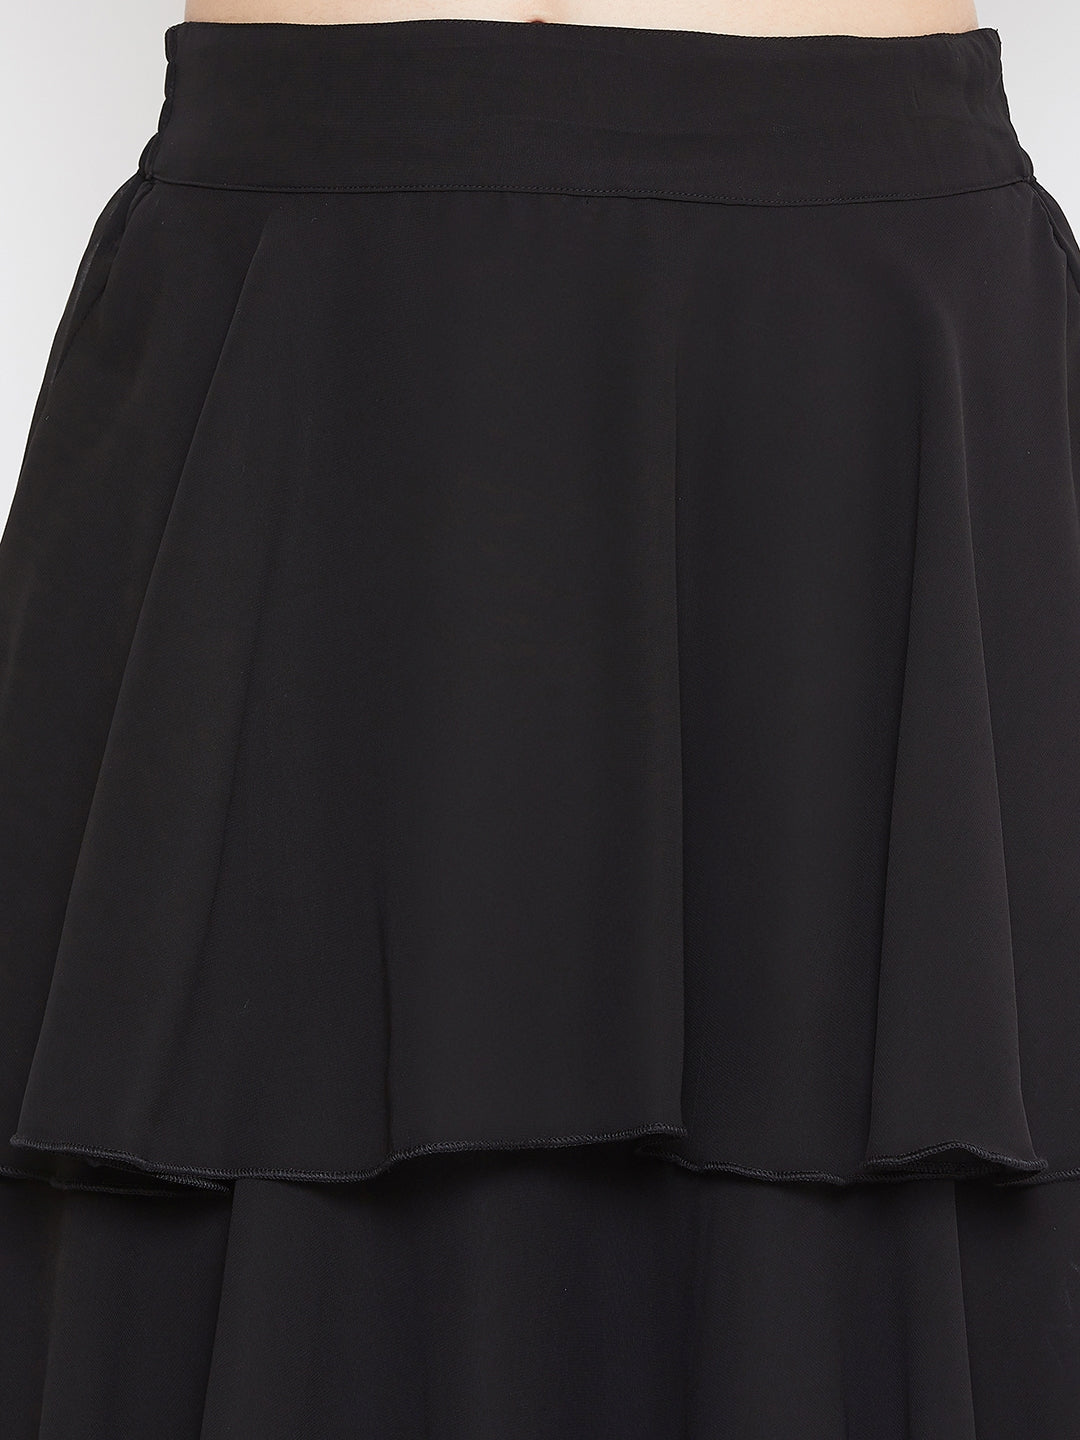 Black Layered Skirt (Sku- BLMG20217).